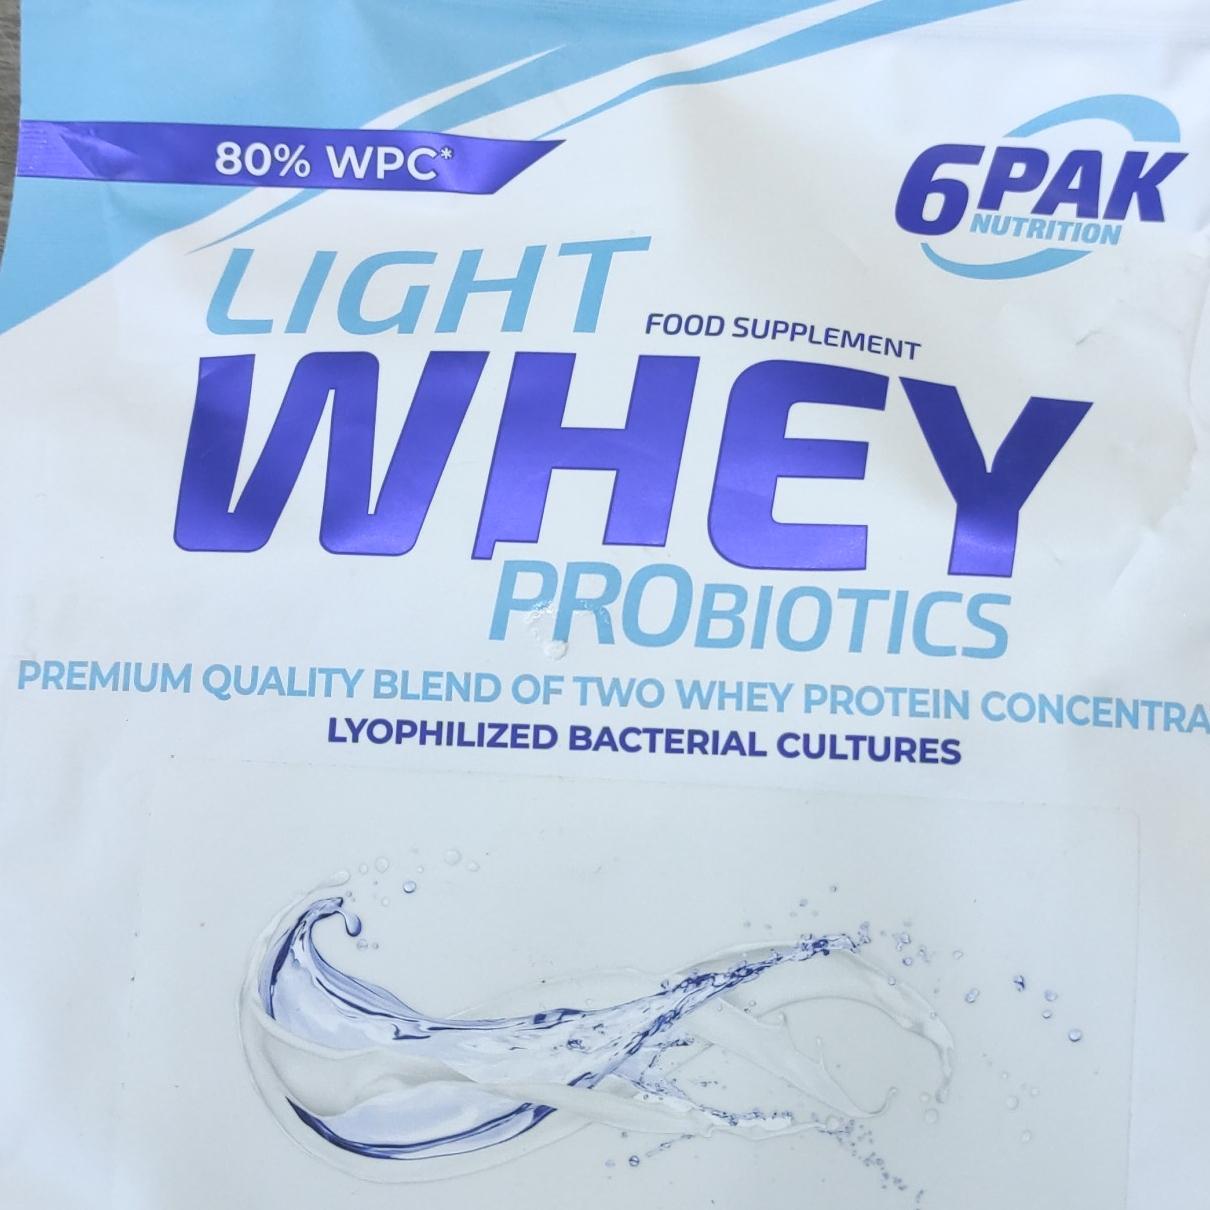 Zdjęcia - Light Whey Probiotics 6paknutrition